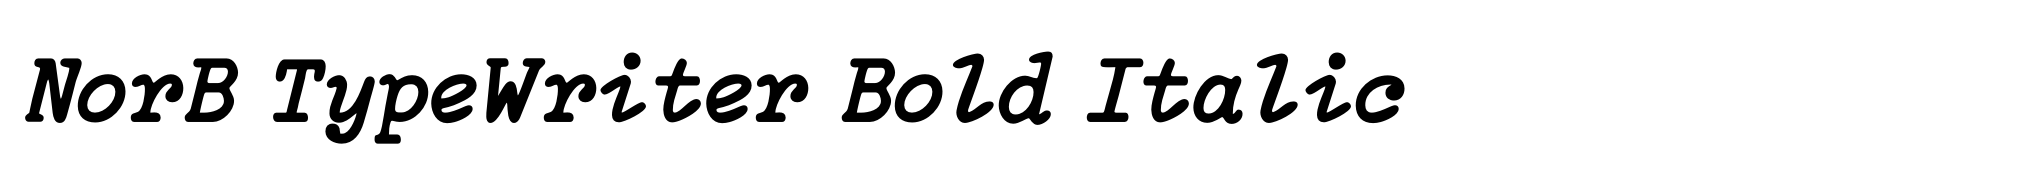 NorB TypeWriter Bold Italic image